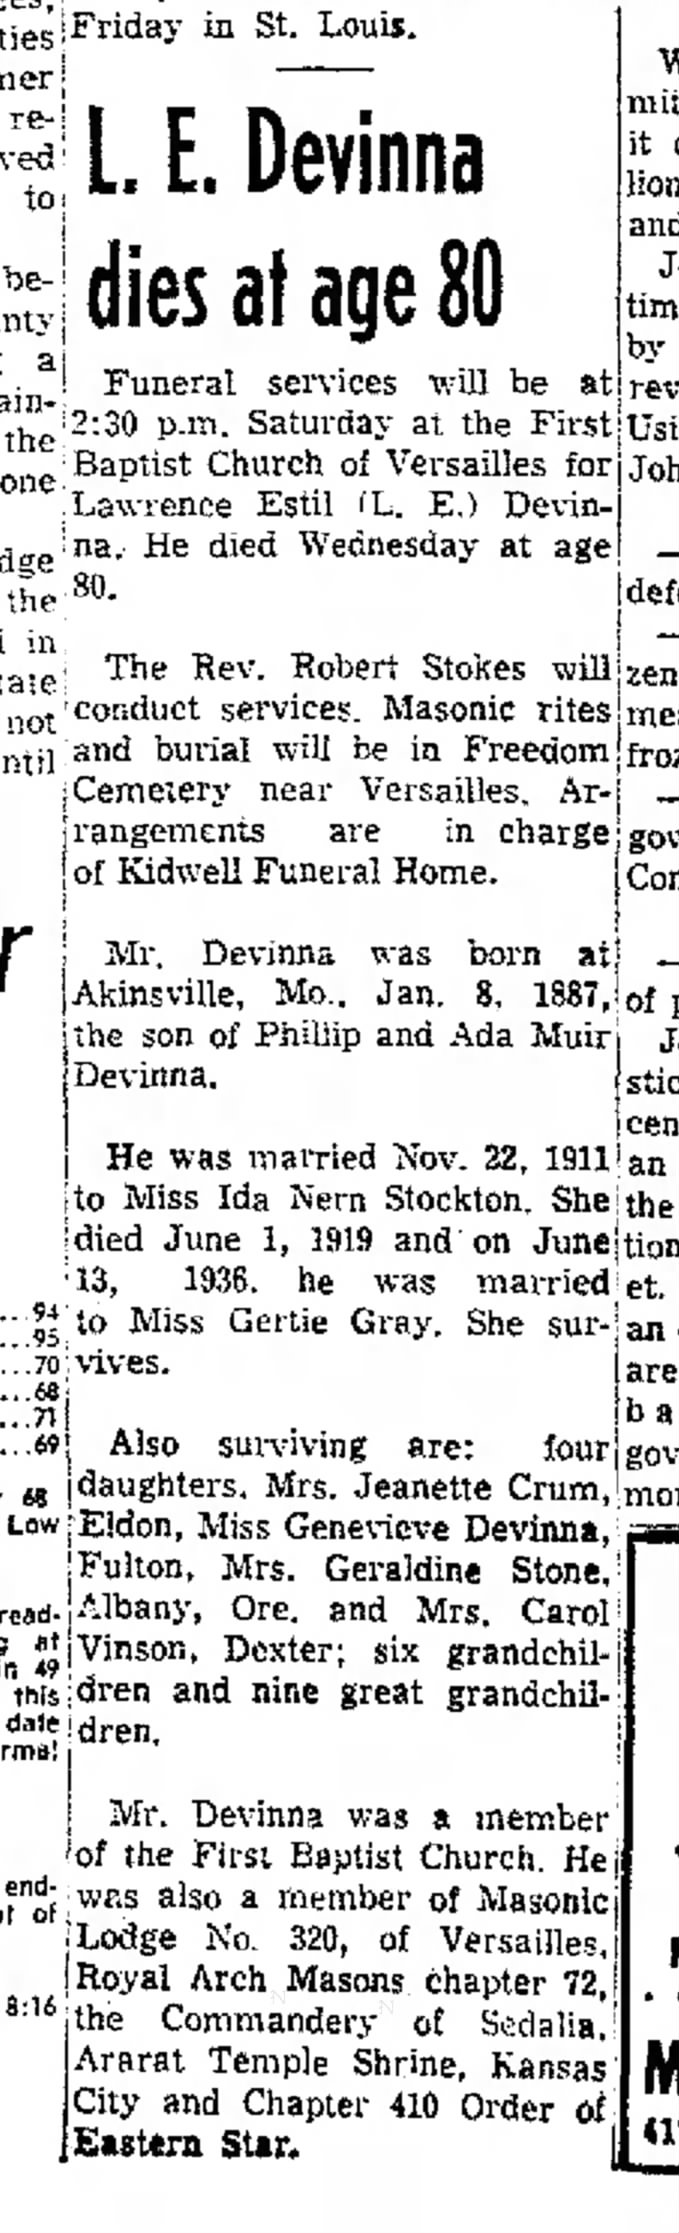 L.E. Devinna obit. The Daily Capital News (Jefferson City, MO) 4 Aug. 1967